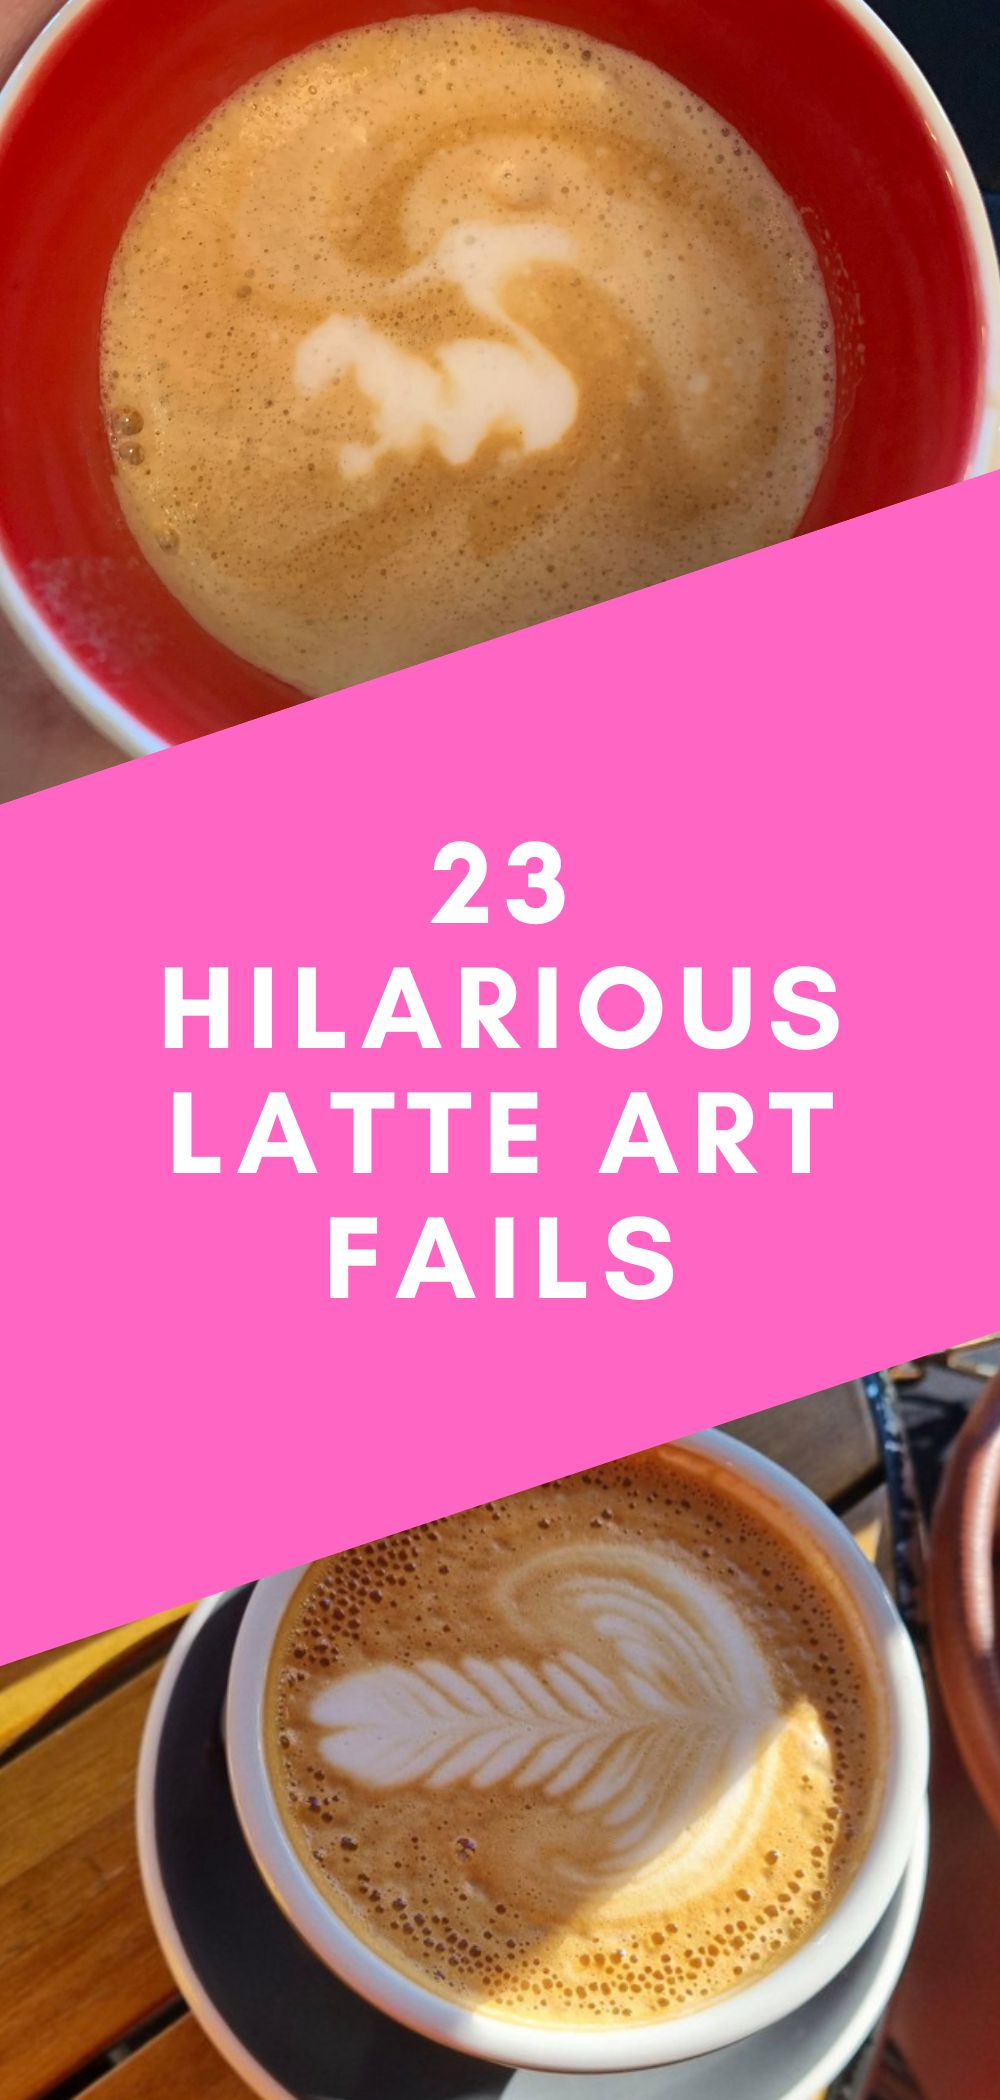 19 Funny Latte Art Fails To Make Aspiring Baristas Laugh - Let's Eat Cake